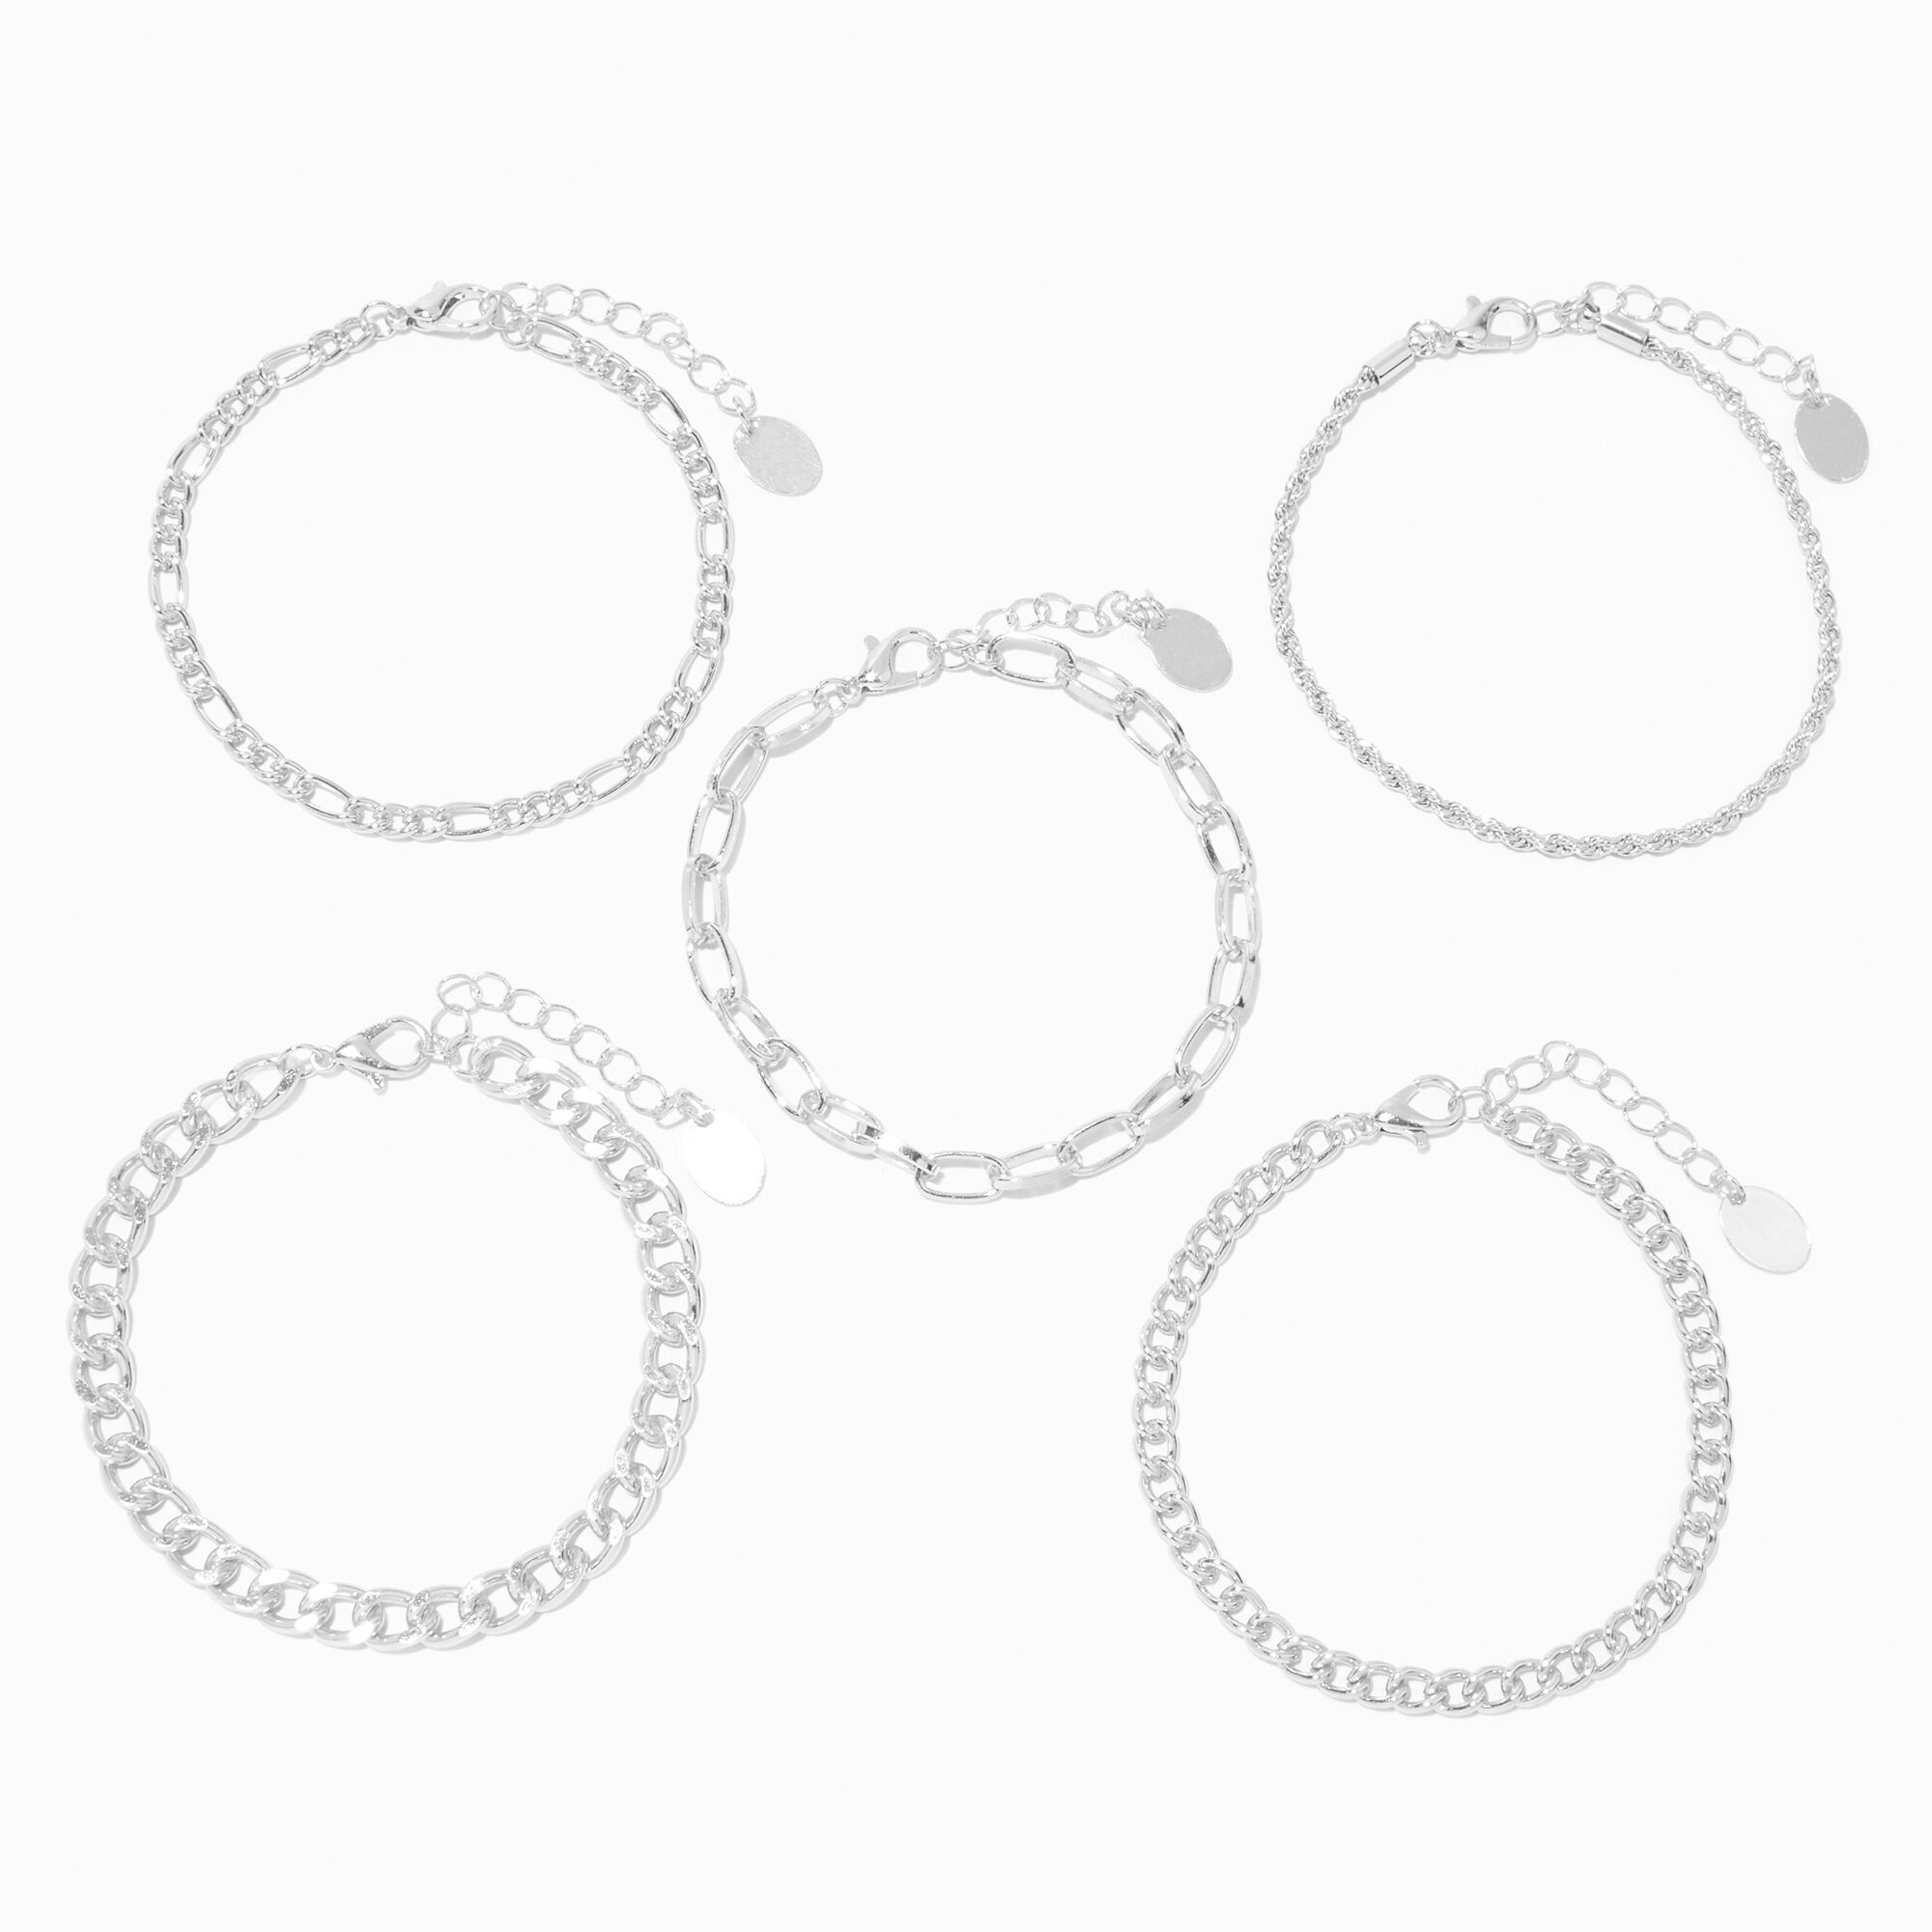 View Claires Tone Woven Chain Bracelet Set 5 Pack Silver information